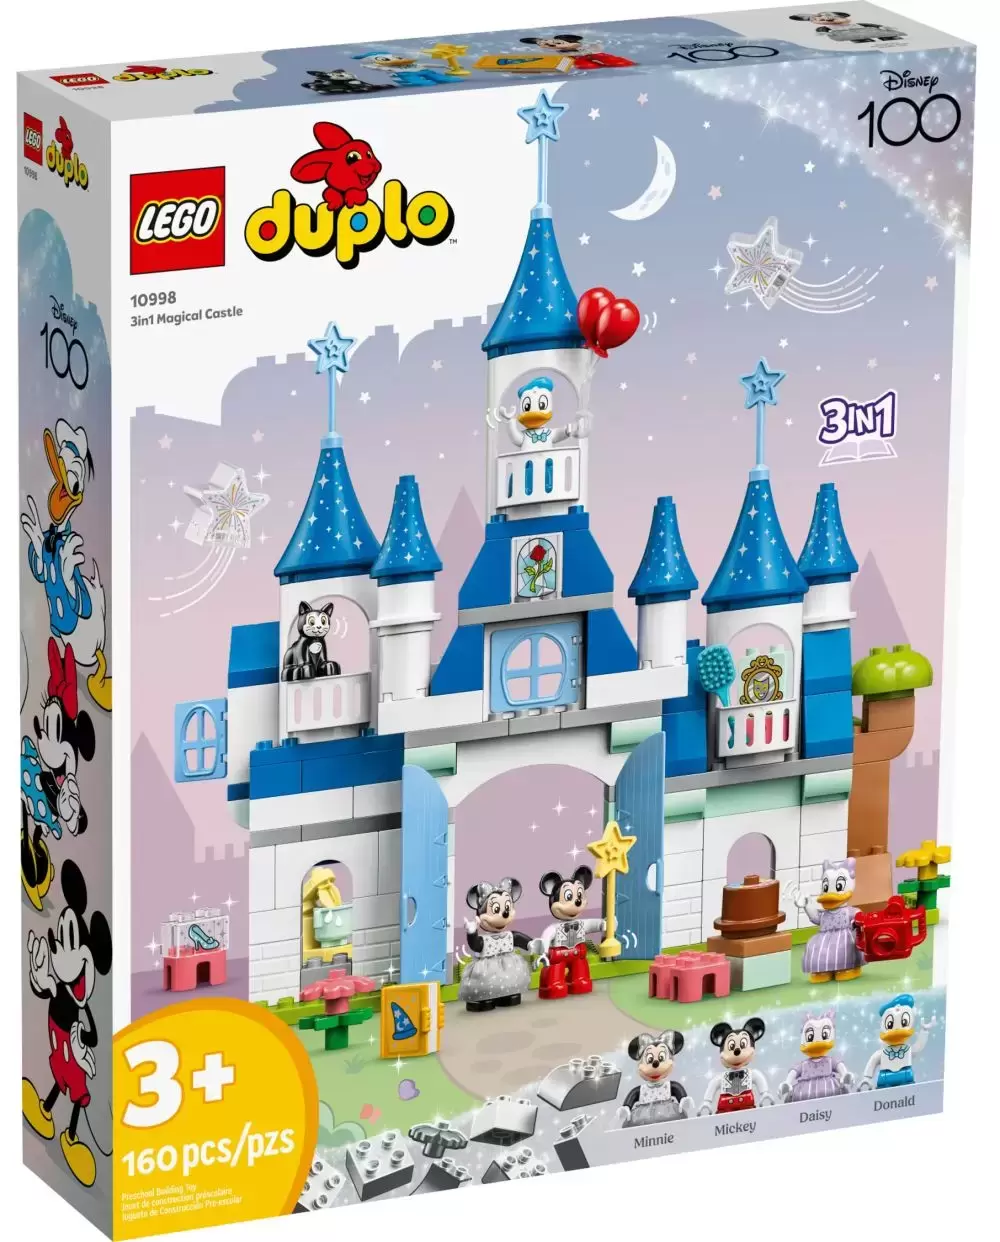 LEGO Duplo - Magical Castle 3-in-1